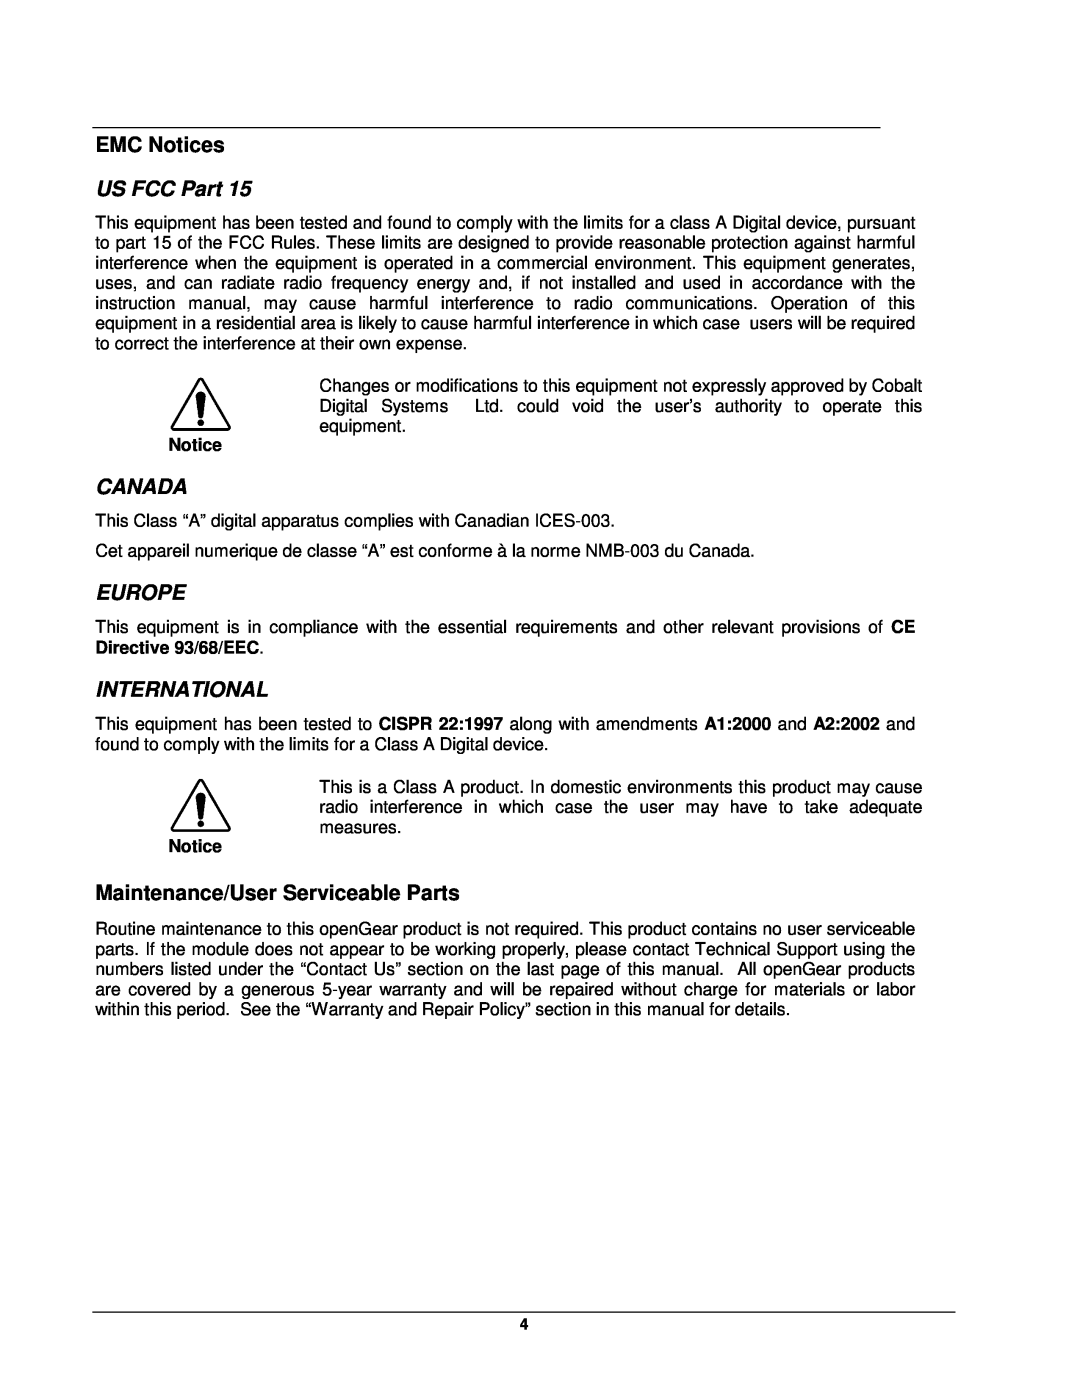 Cobalt Networks 9252 user manual US FCC Part, Canada, Europe, International, Directive 93/68/EEC 